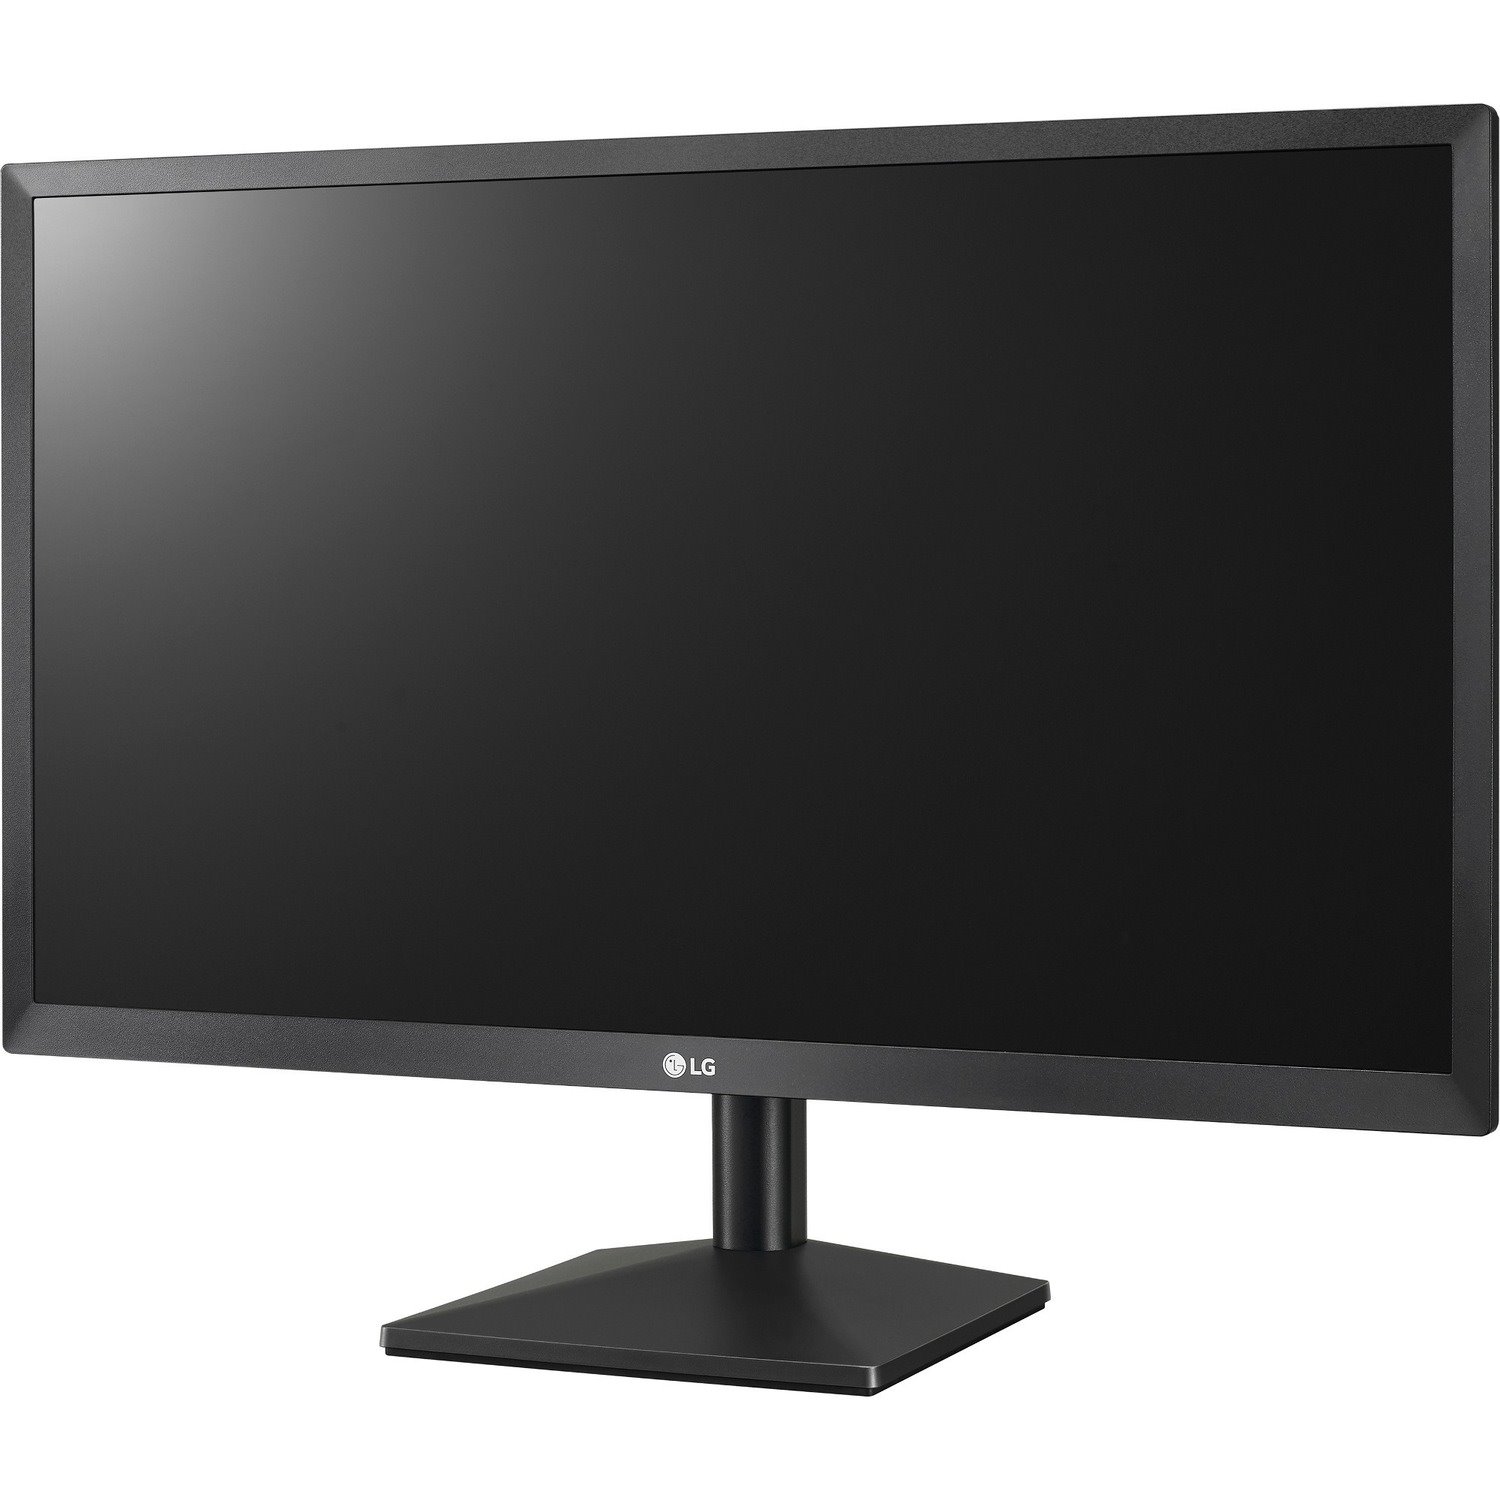 LG 27MK430H-B 27" Full HD LCD Monitor - 16:9 - Matte Black